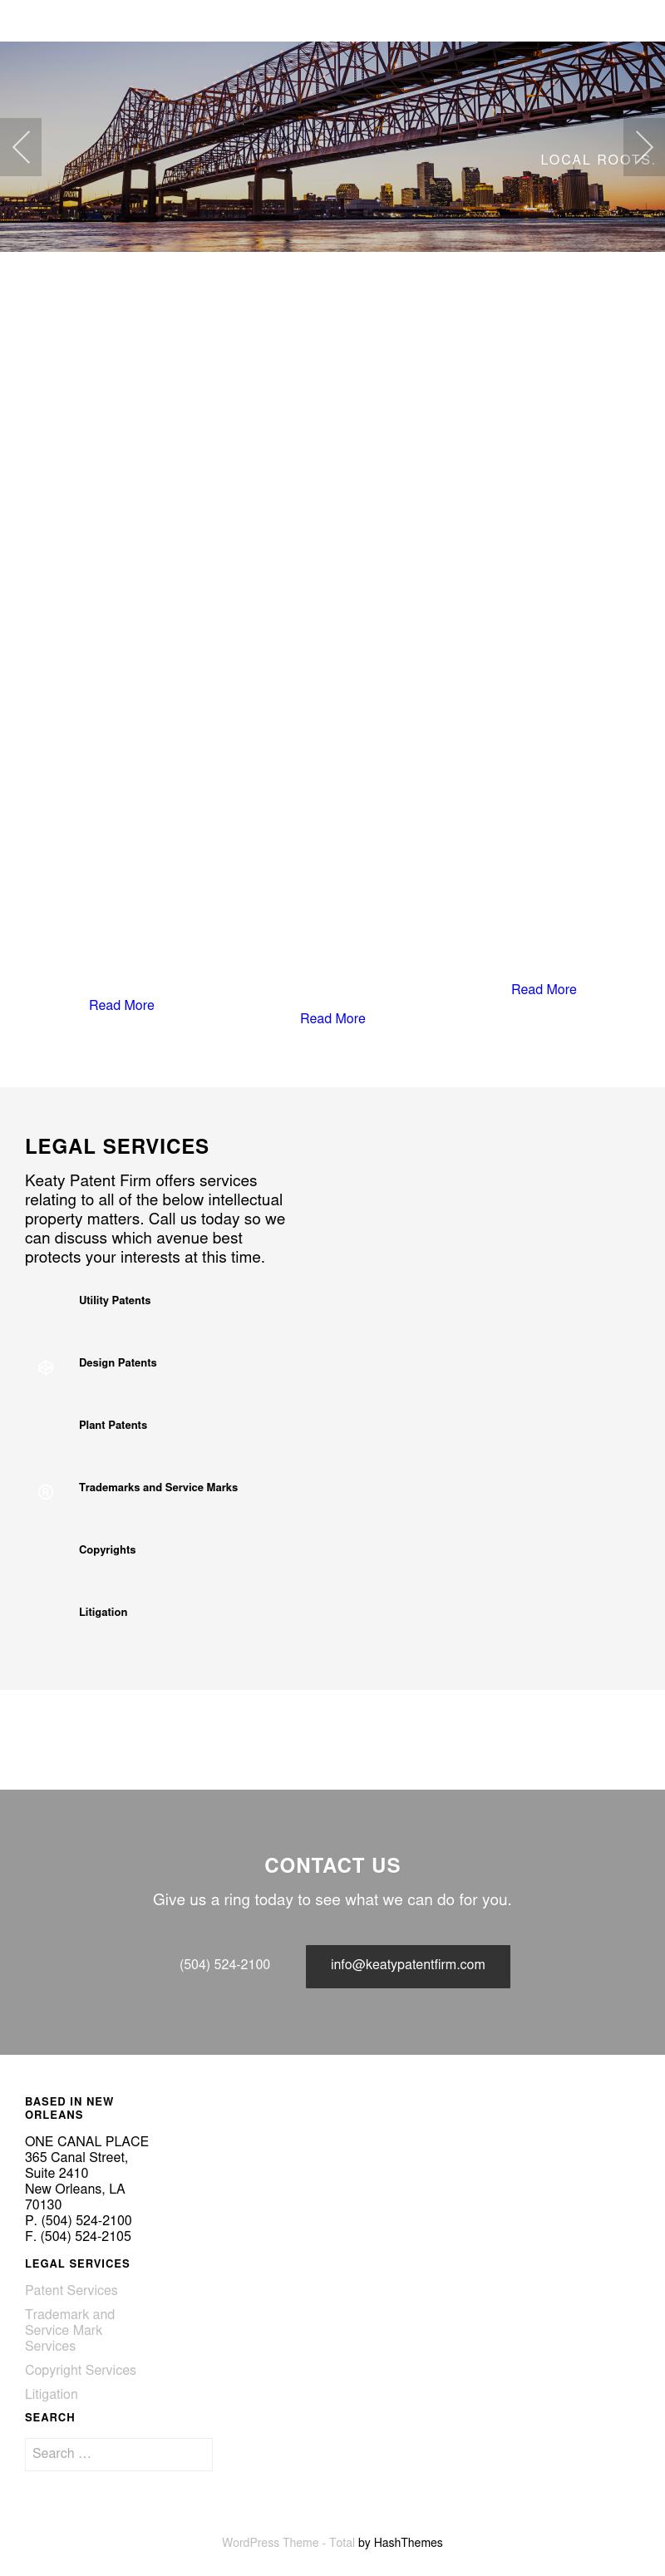 Keaty Patent Firm LLC - New Orleans LA Lawyers